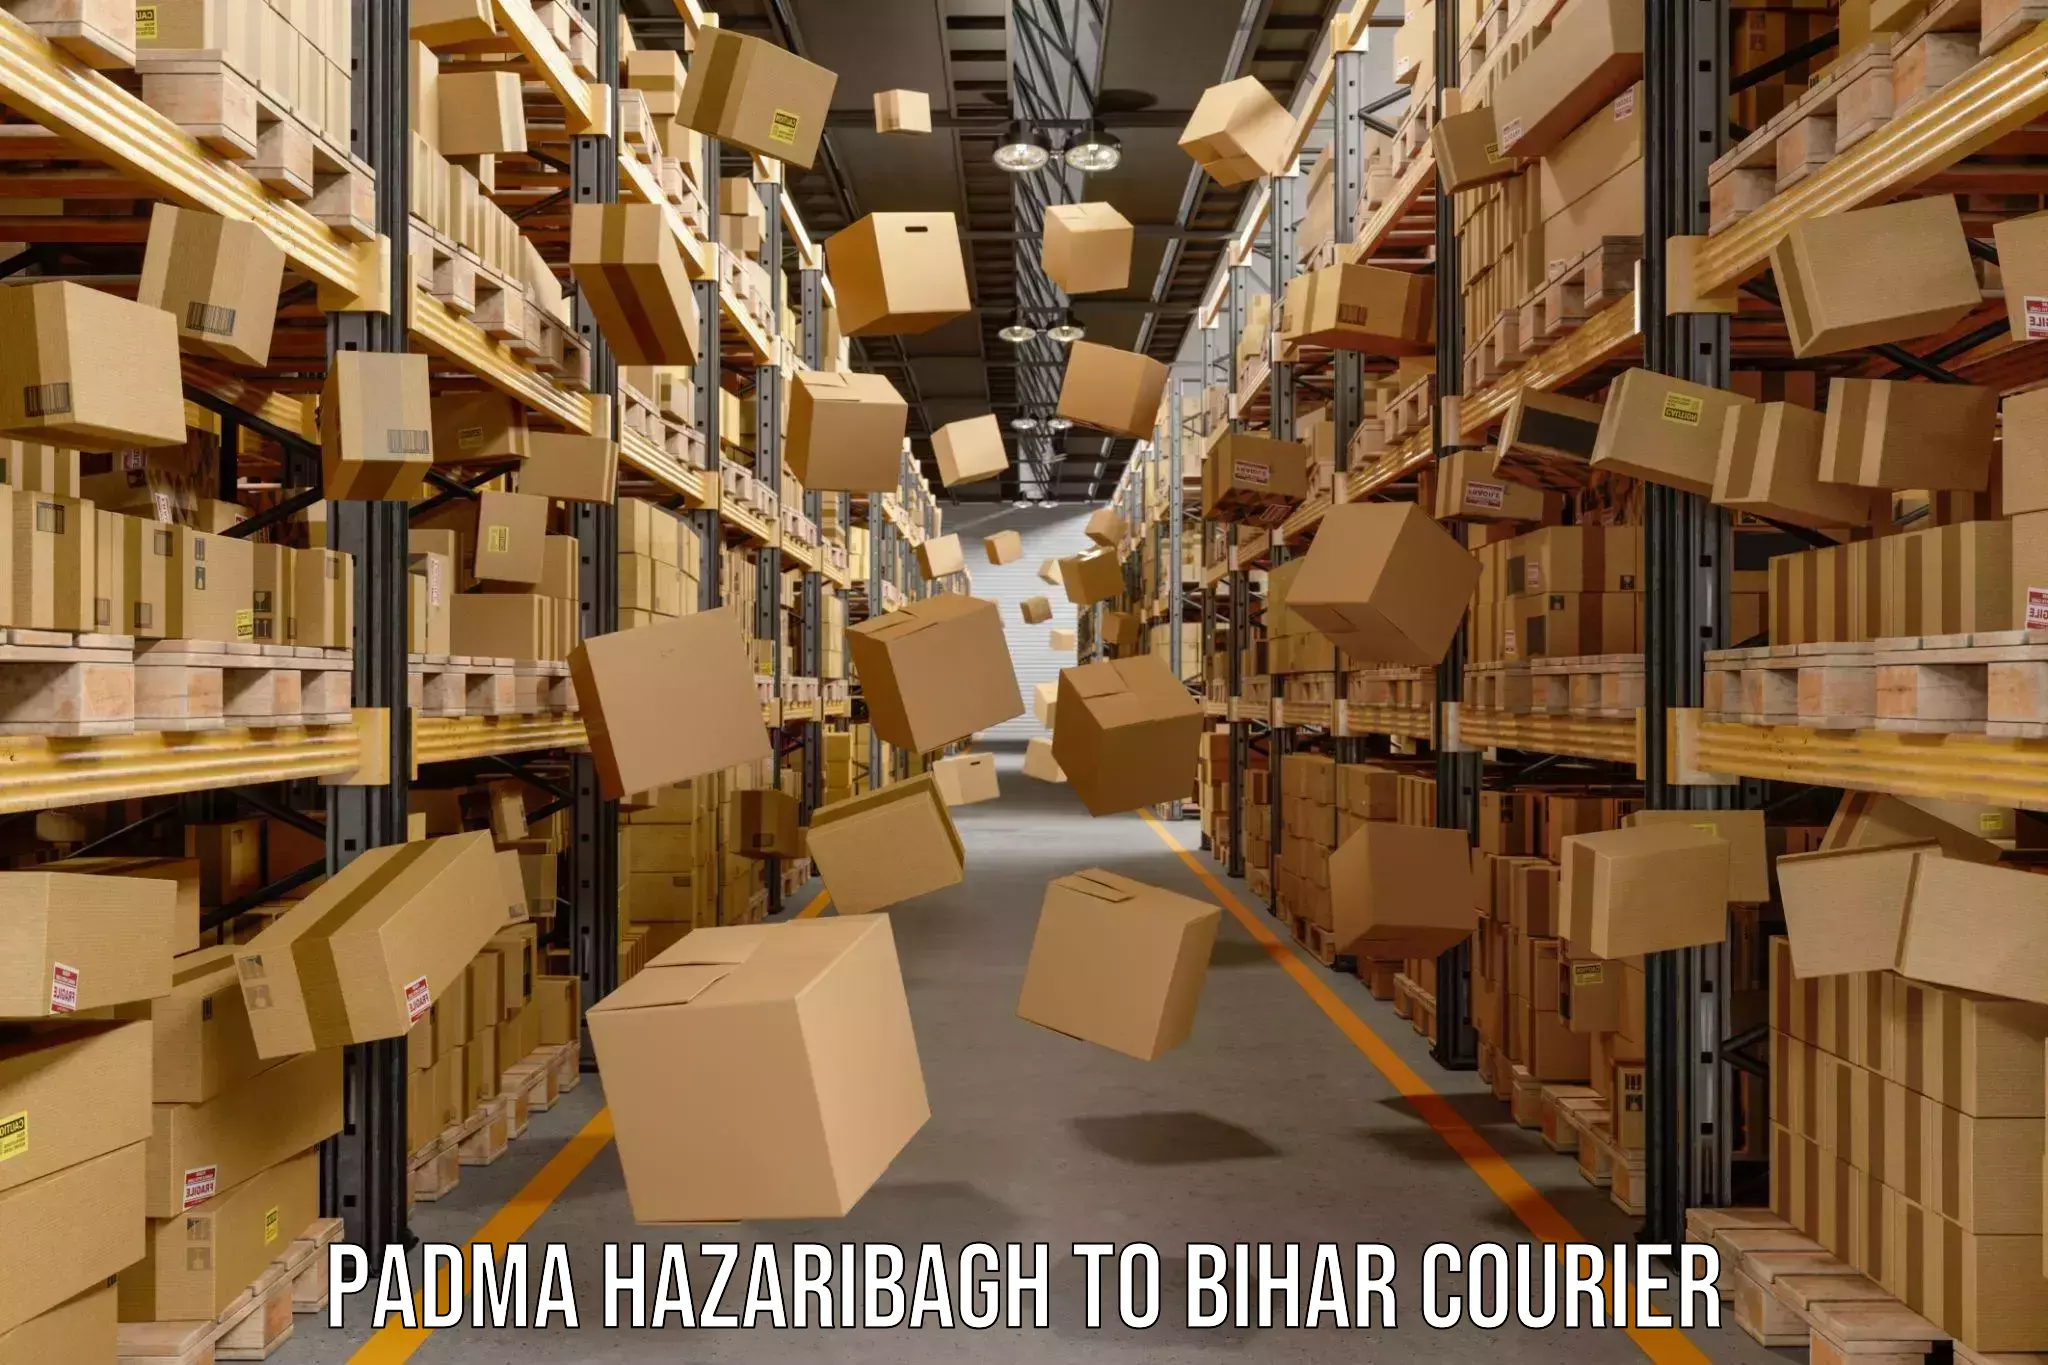 Express delivery capabilities Padma Hazaribagh to Bhabua